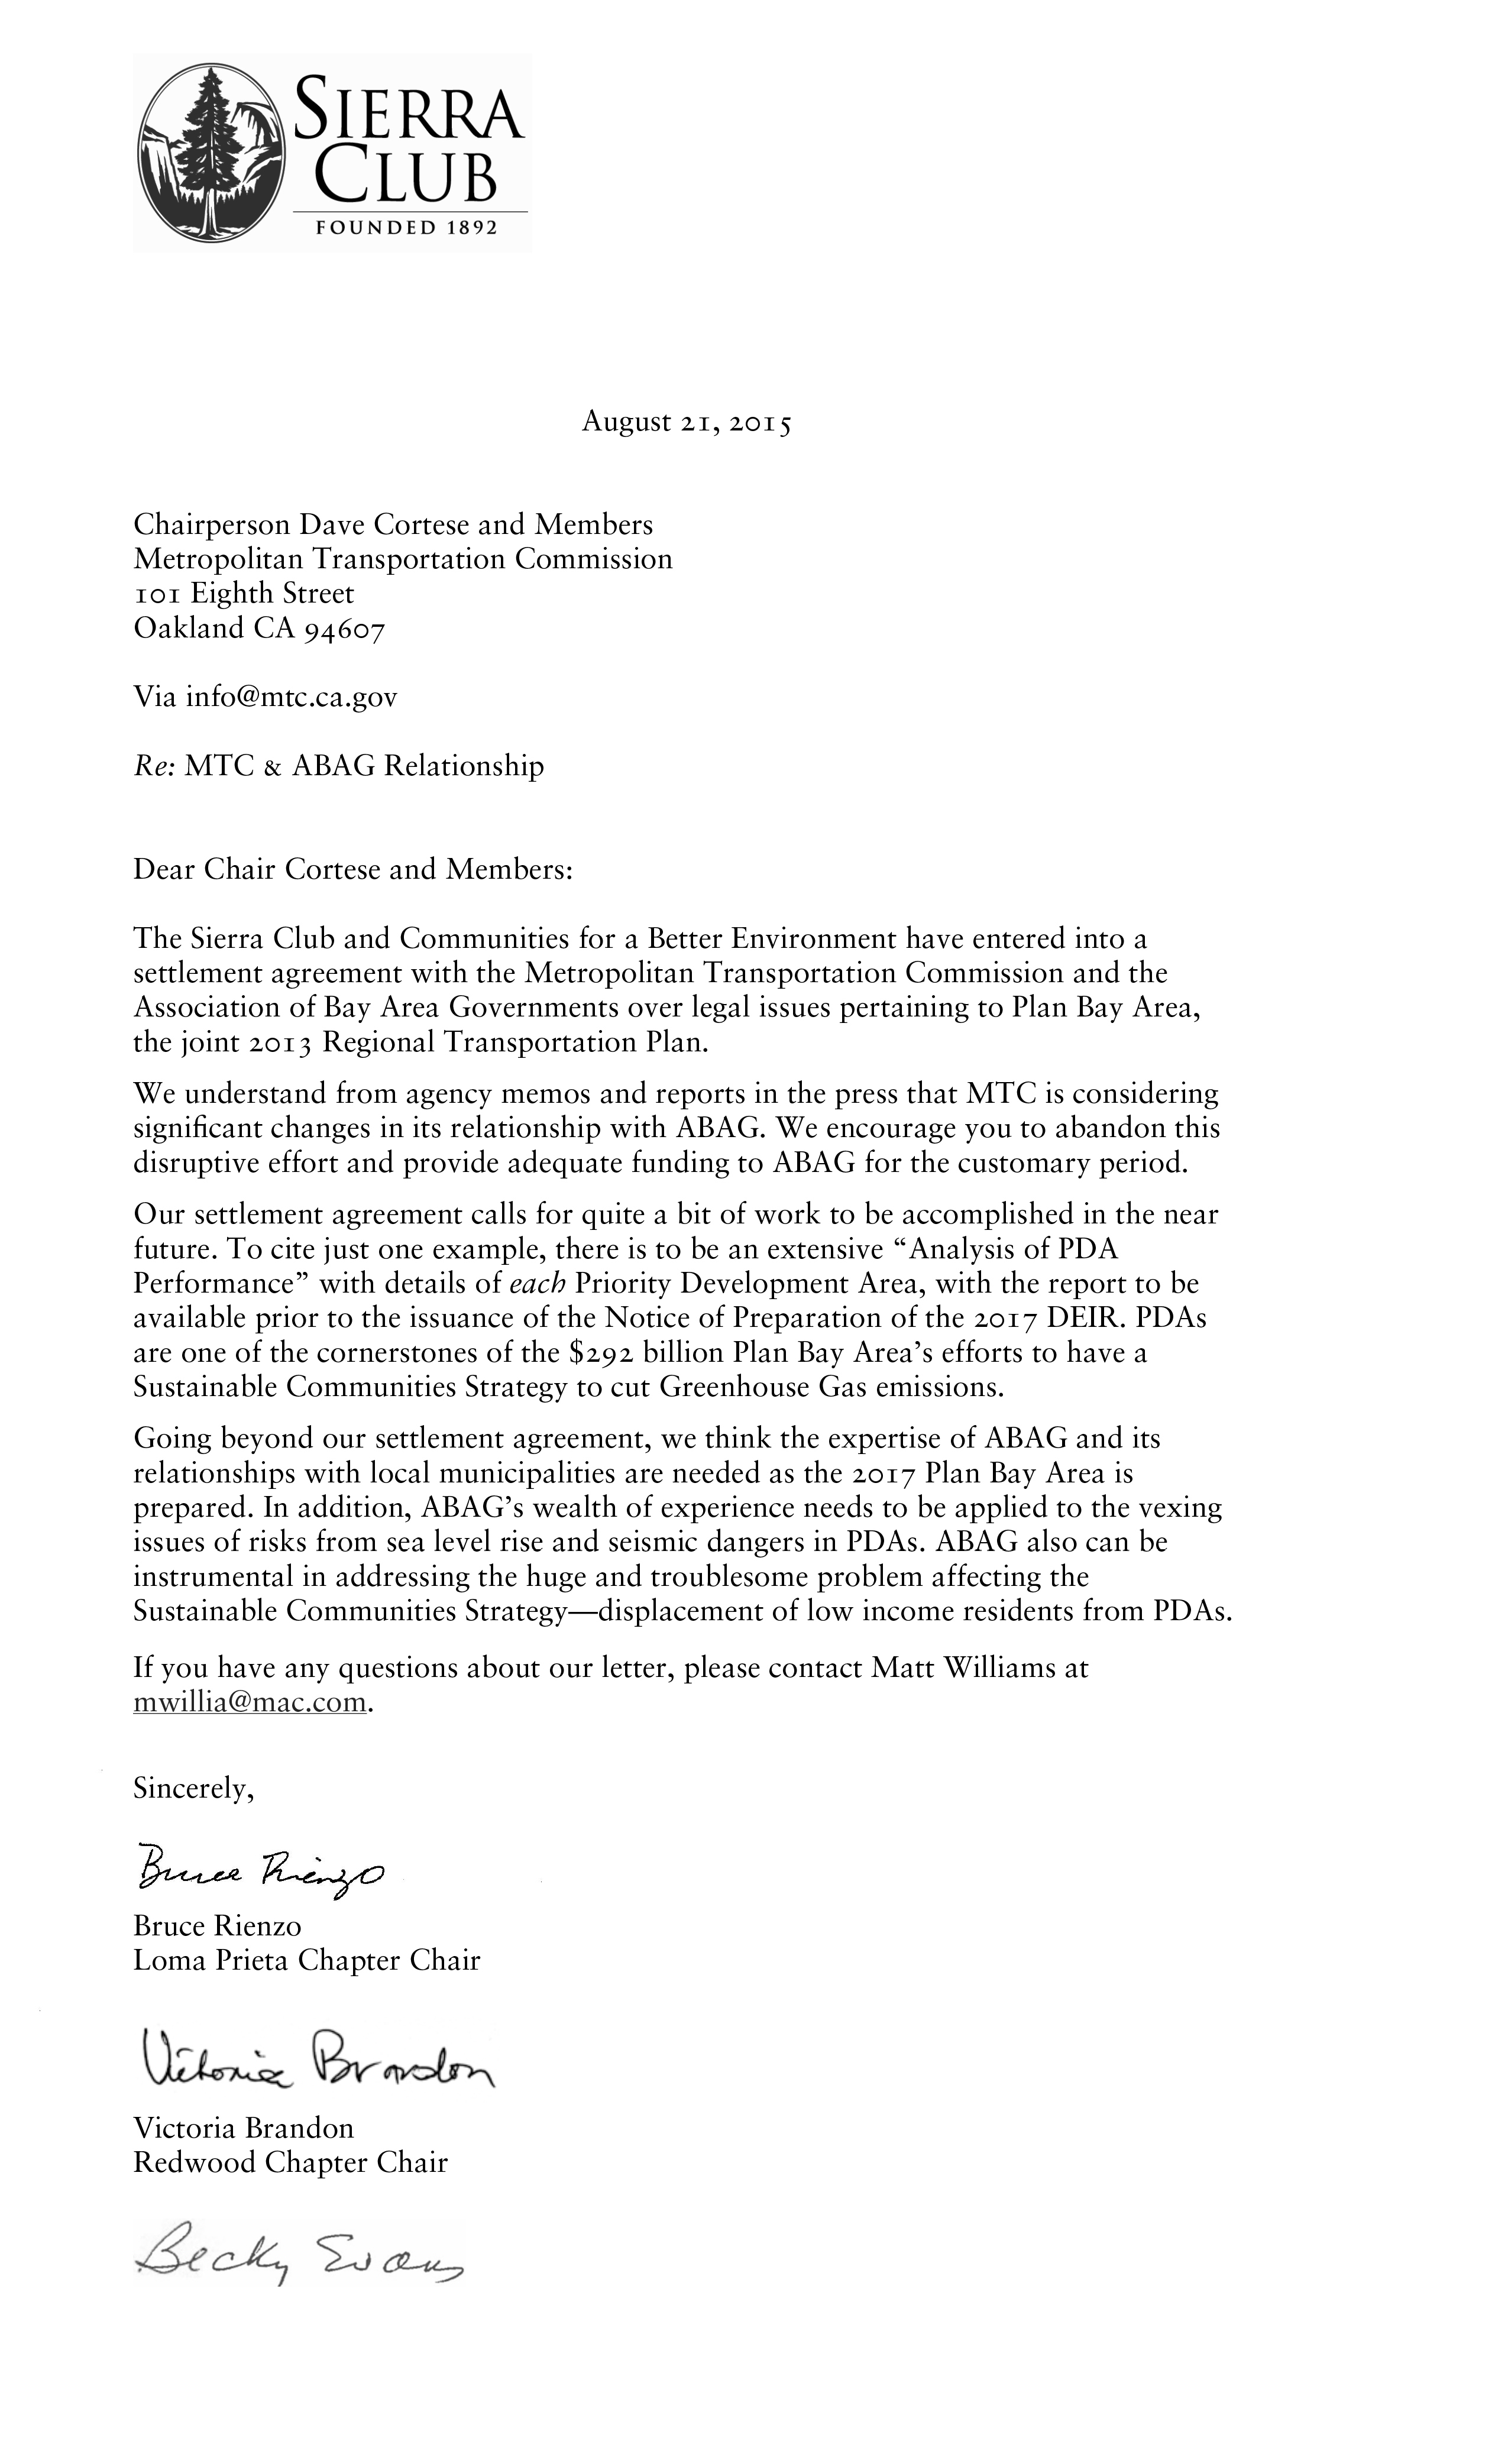 Letter to the Metropolitan Transportation Commission, August 21, 2015